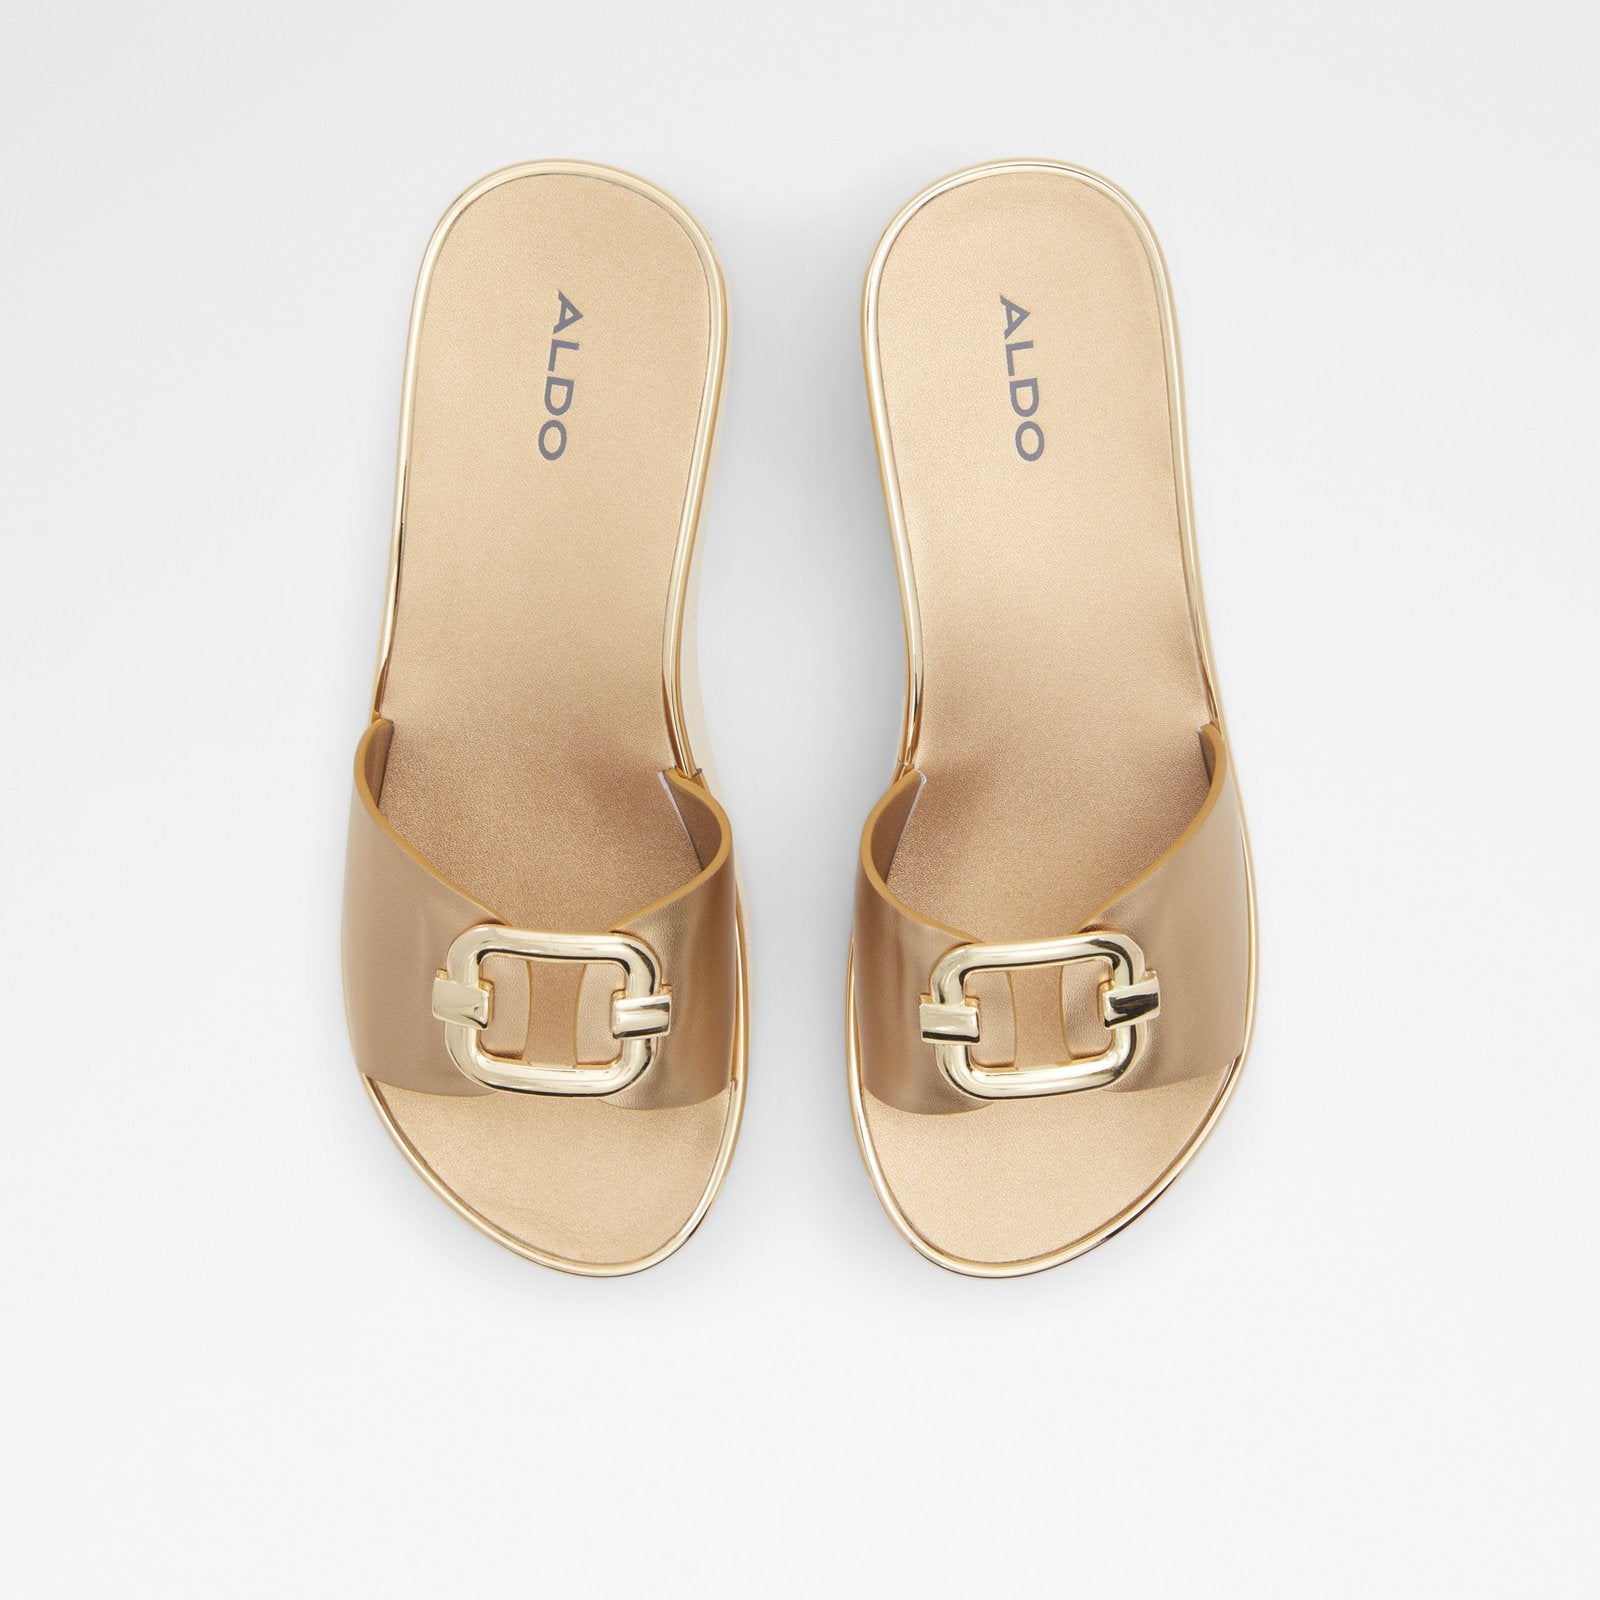 Onayllan / Beach Sandals Women Shoes - Gold - ALDO KSA